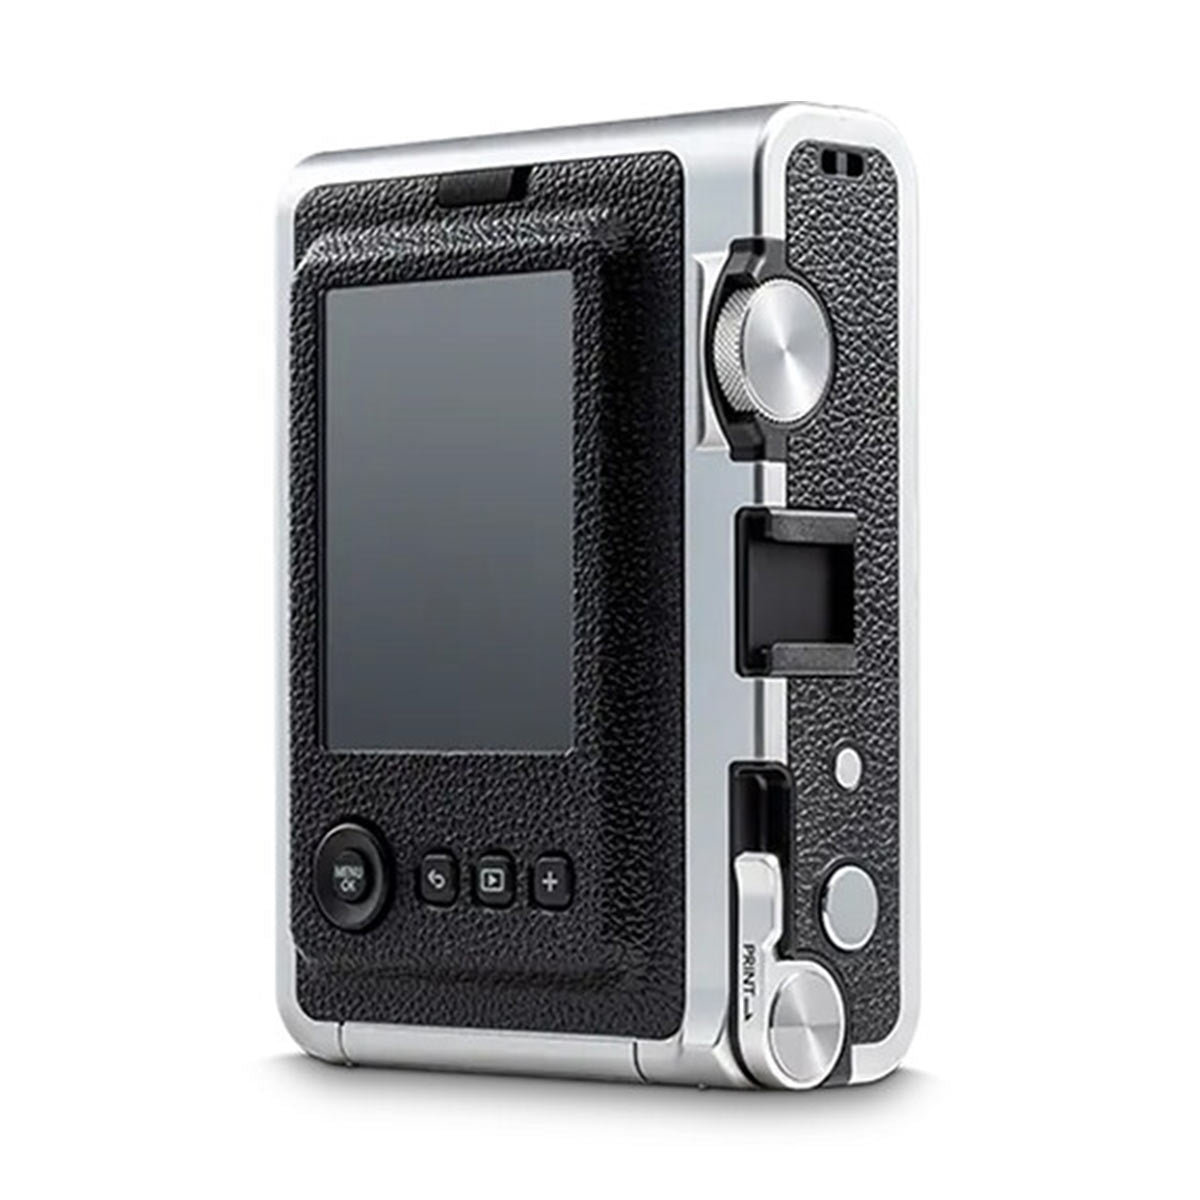 Fujifilm INSTAX Mini Evo Hybrid Instant Camera - Film Bundle